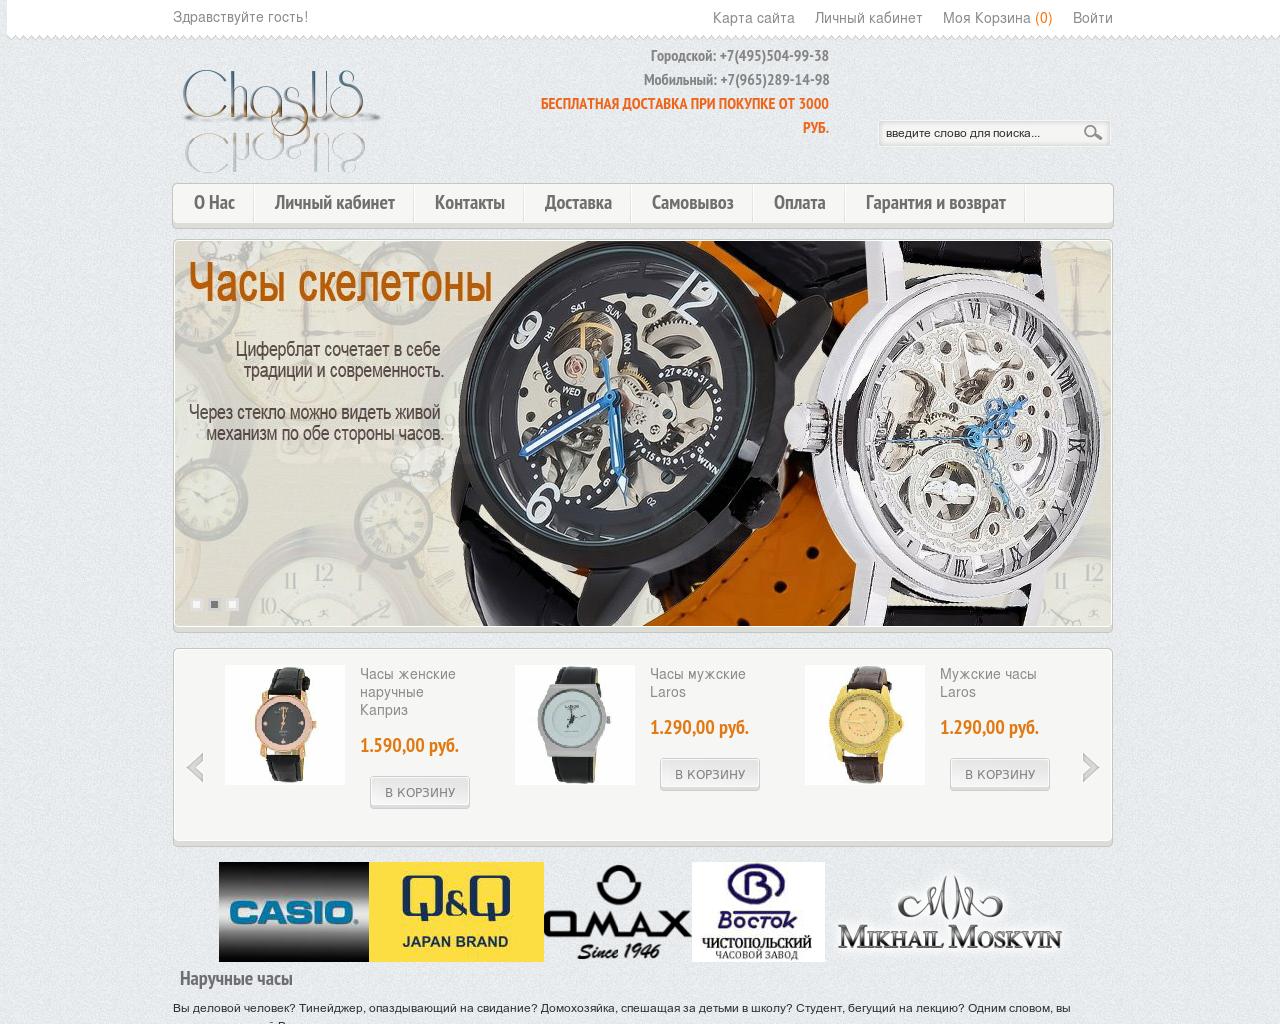 Изображение сайта chasus.ru в разрешении 1280x1024